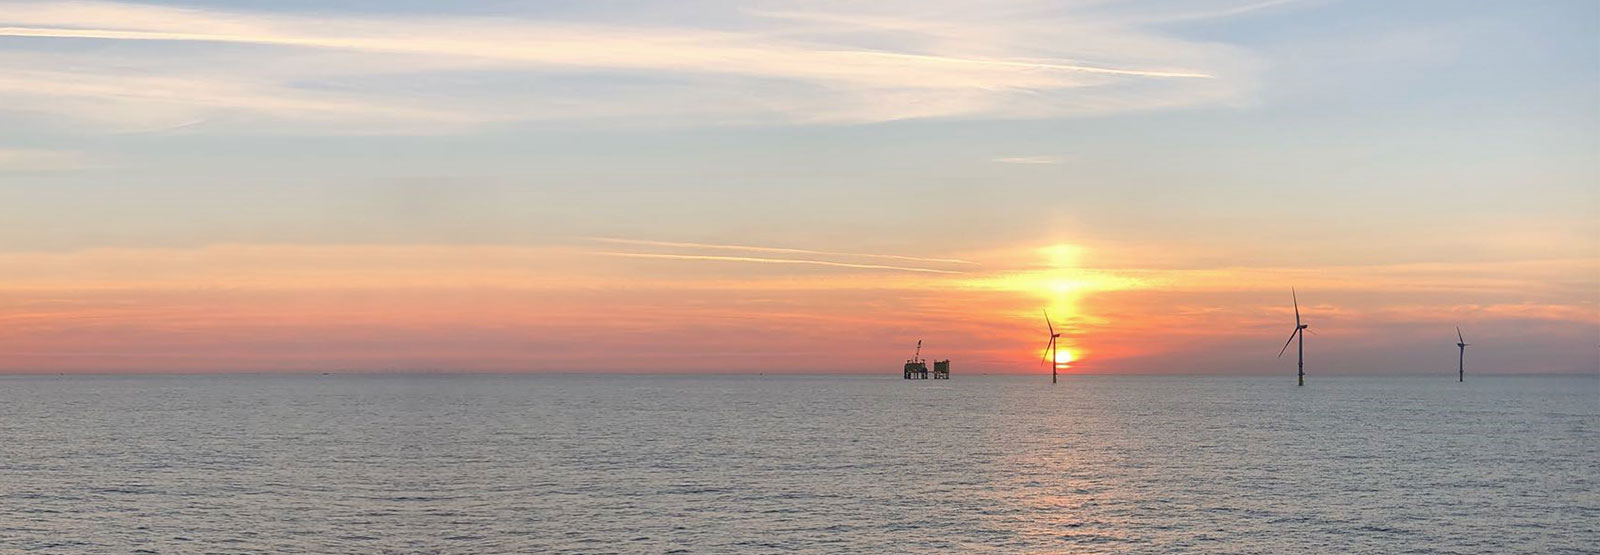 Sunset at German North Sea